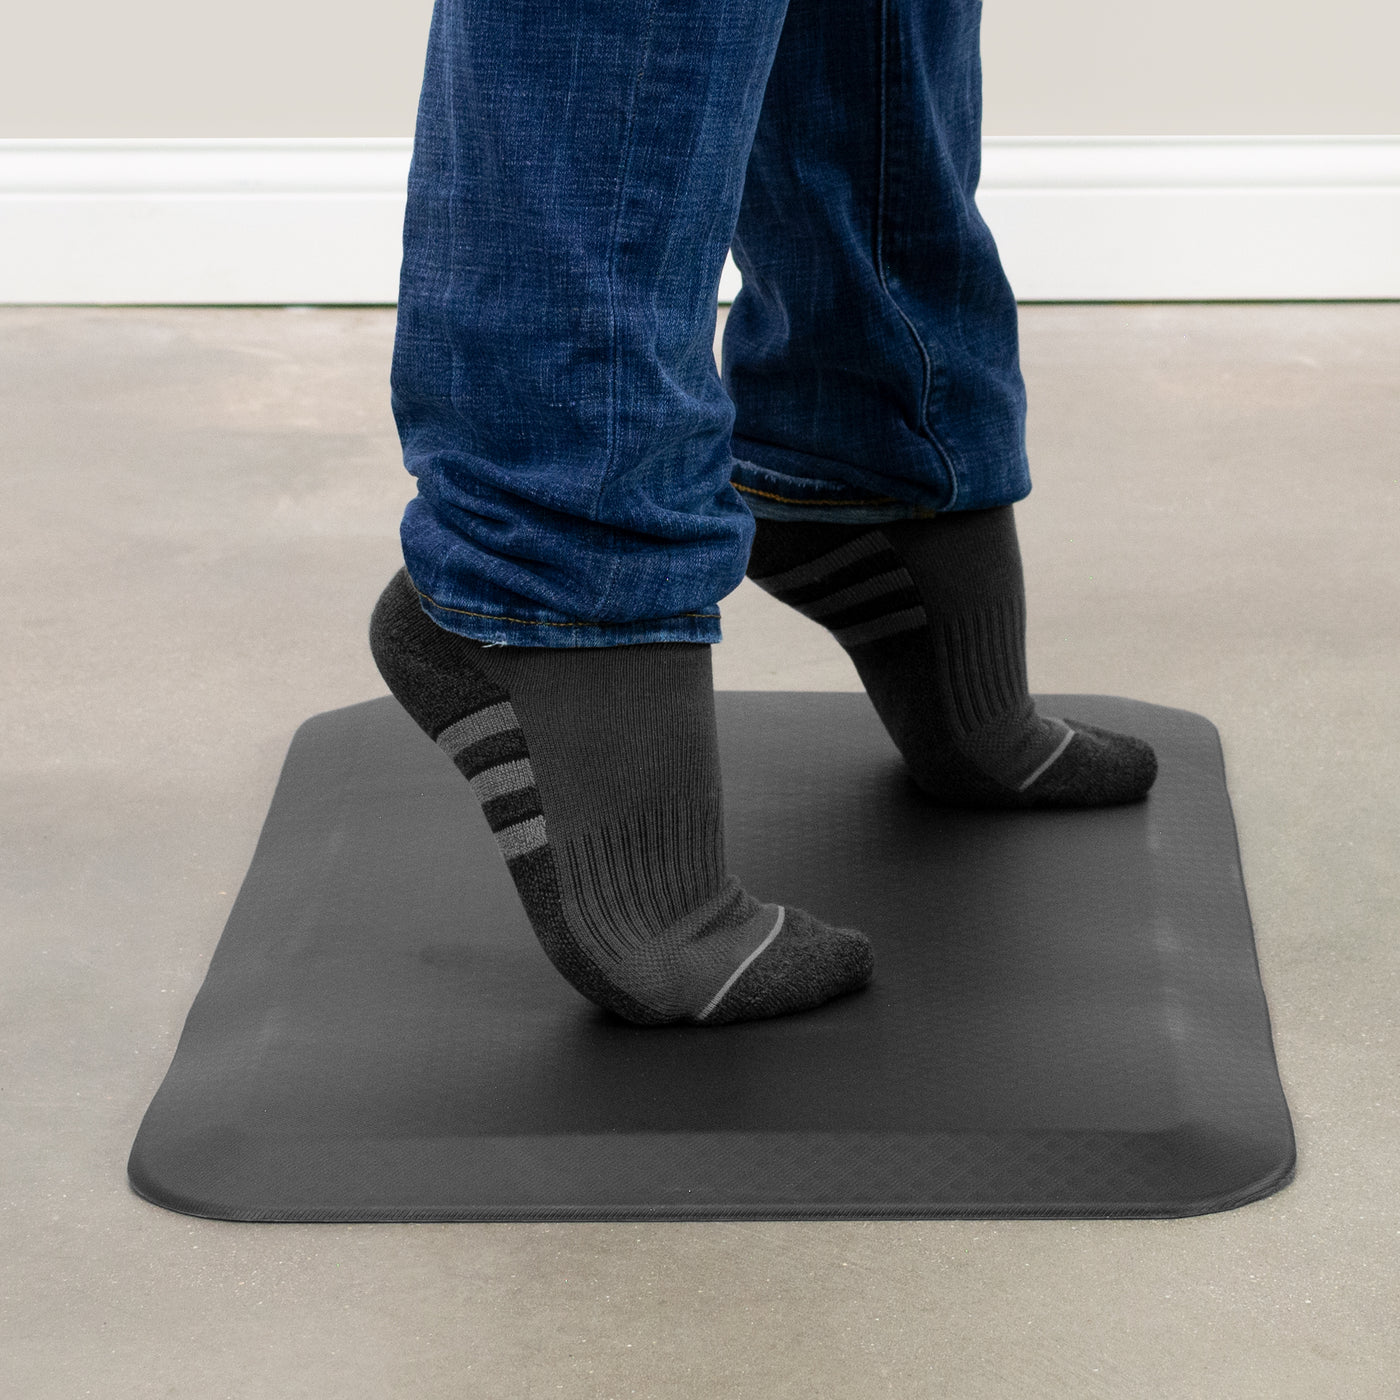 Black anti-fatigue standing mat from VIVO.